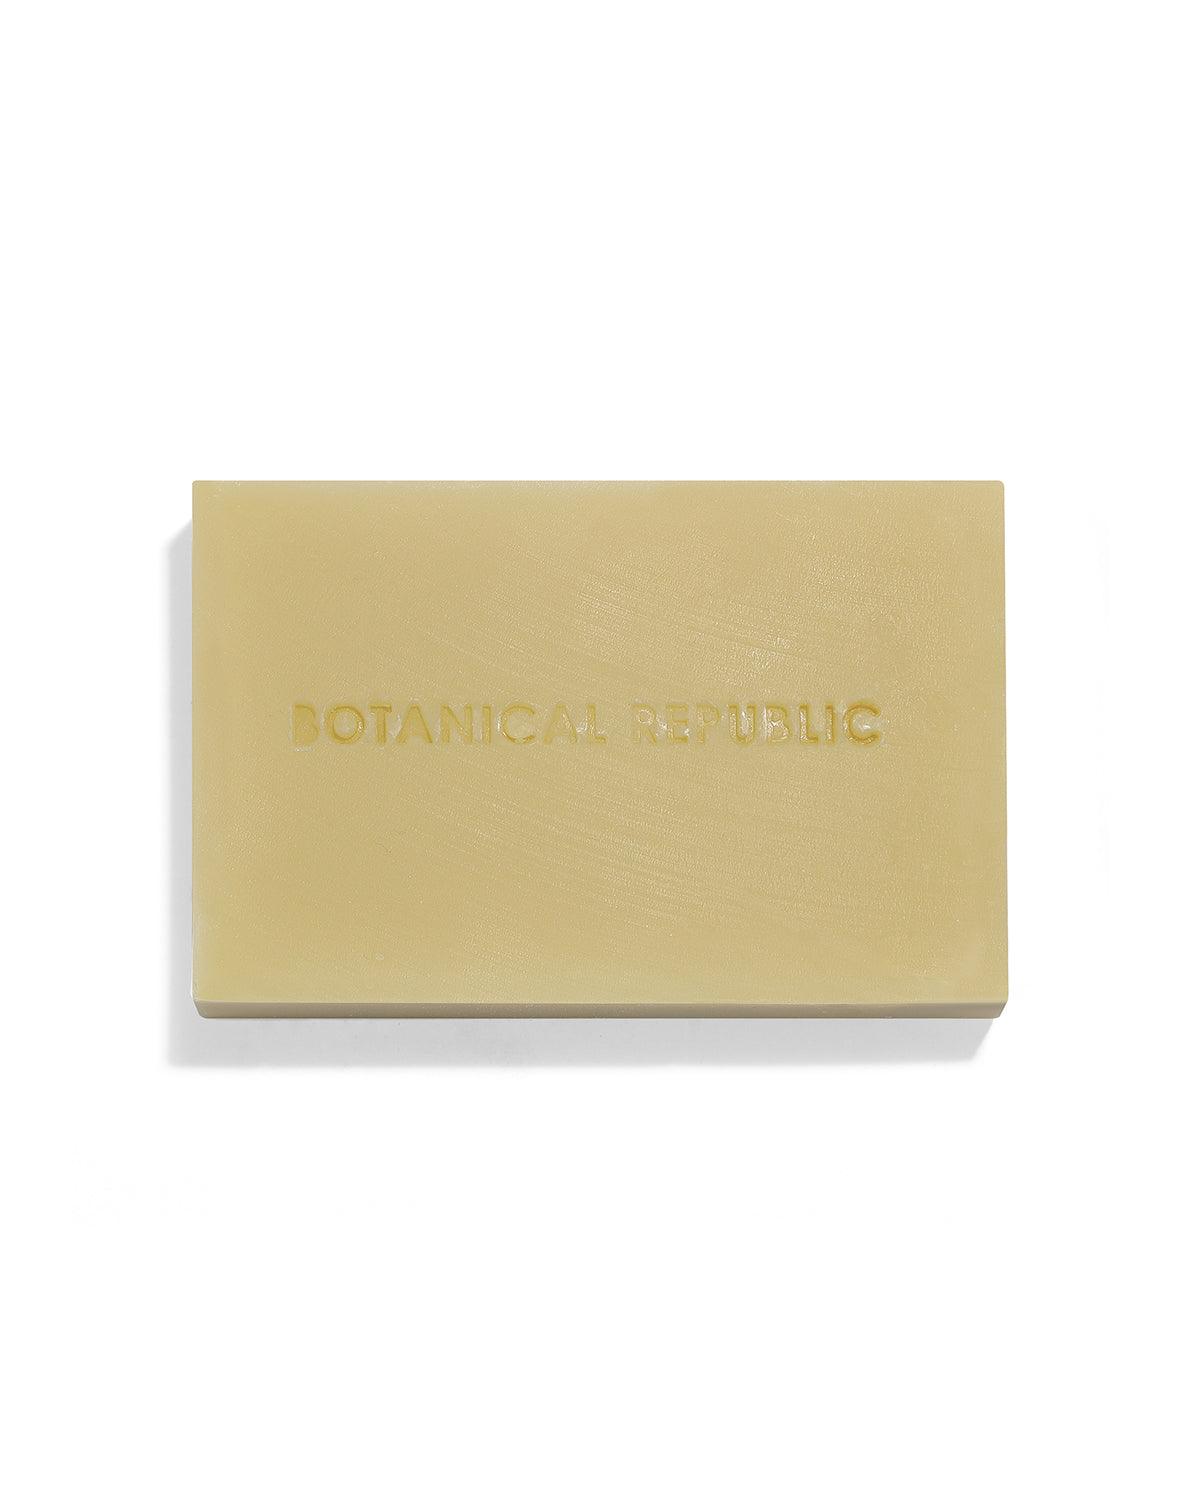  Gentle Bar Soap by Botanical Republic Botanical Republic Perfumarie